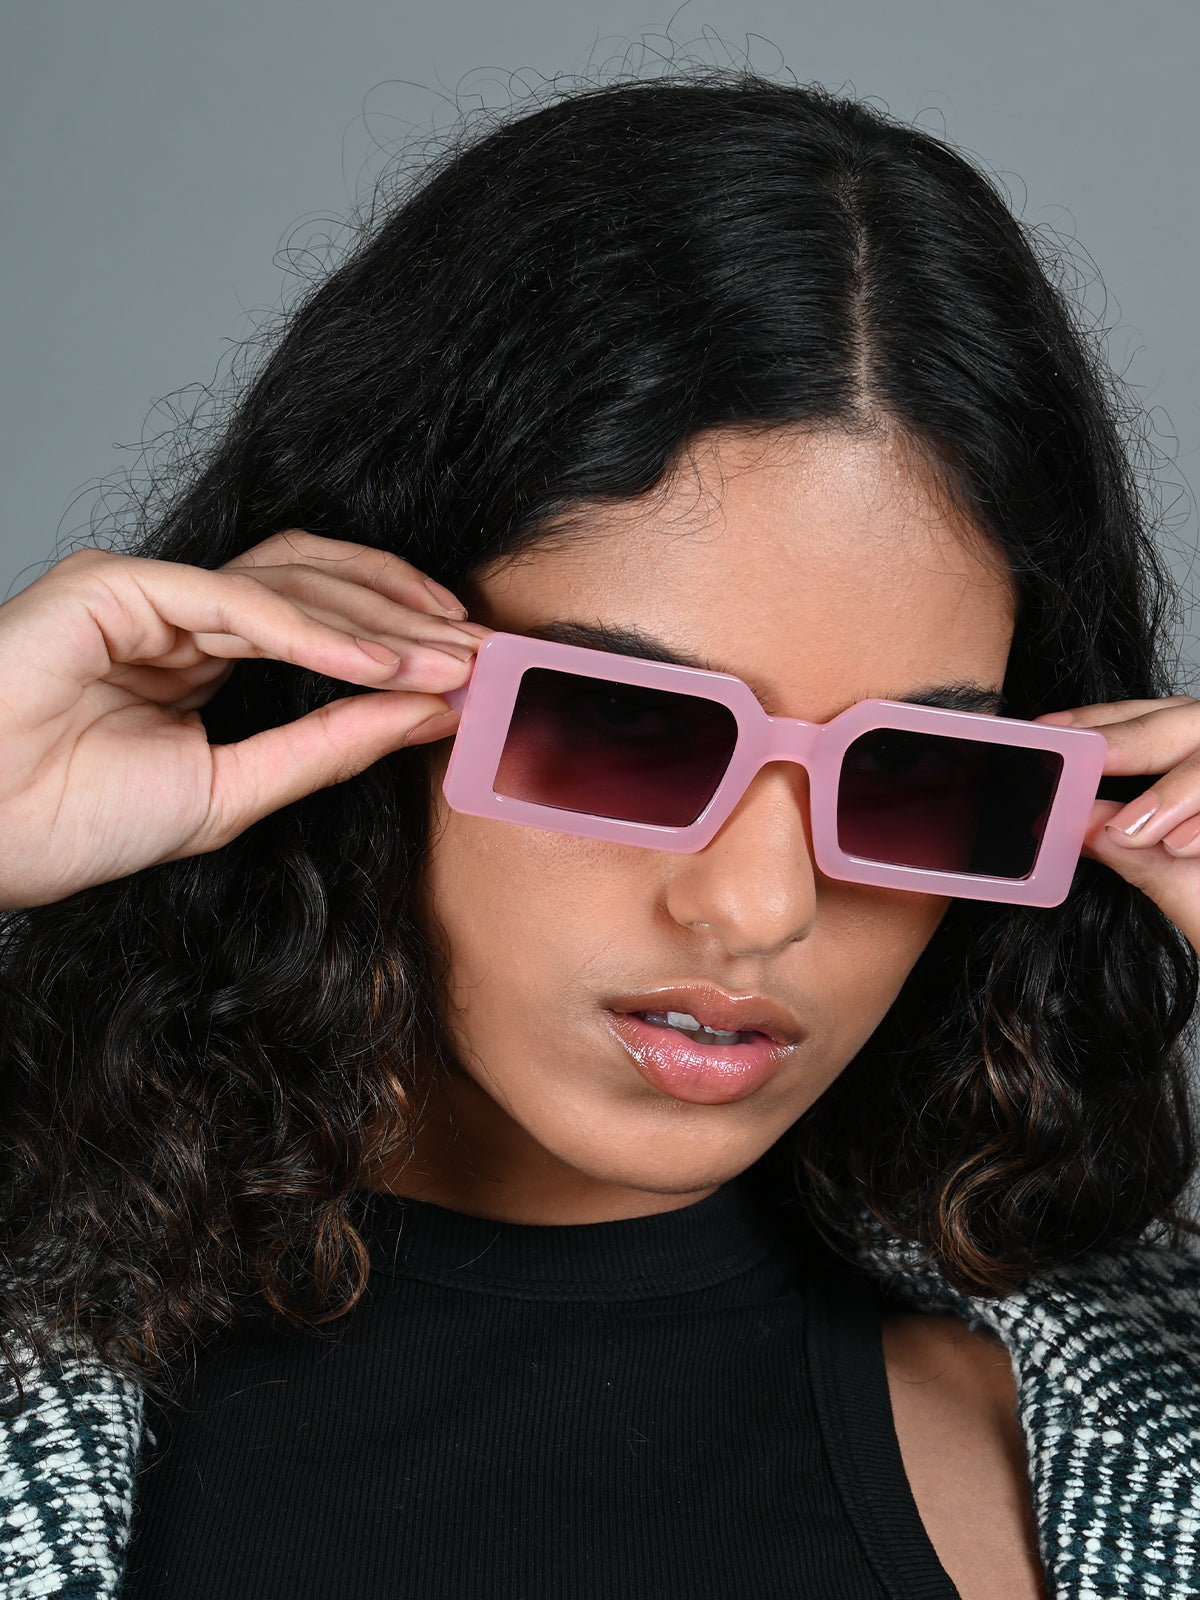 Odette Pink Acrylic Rectangular Sunglasses for Women